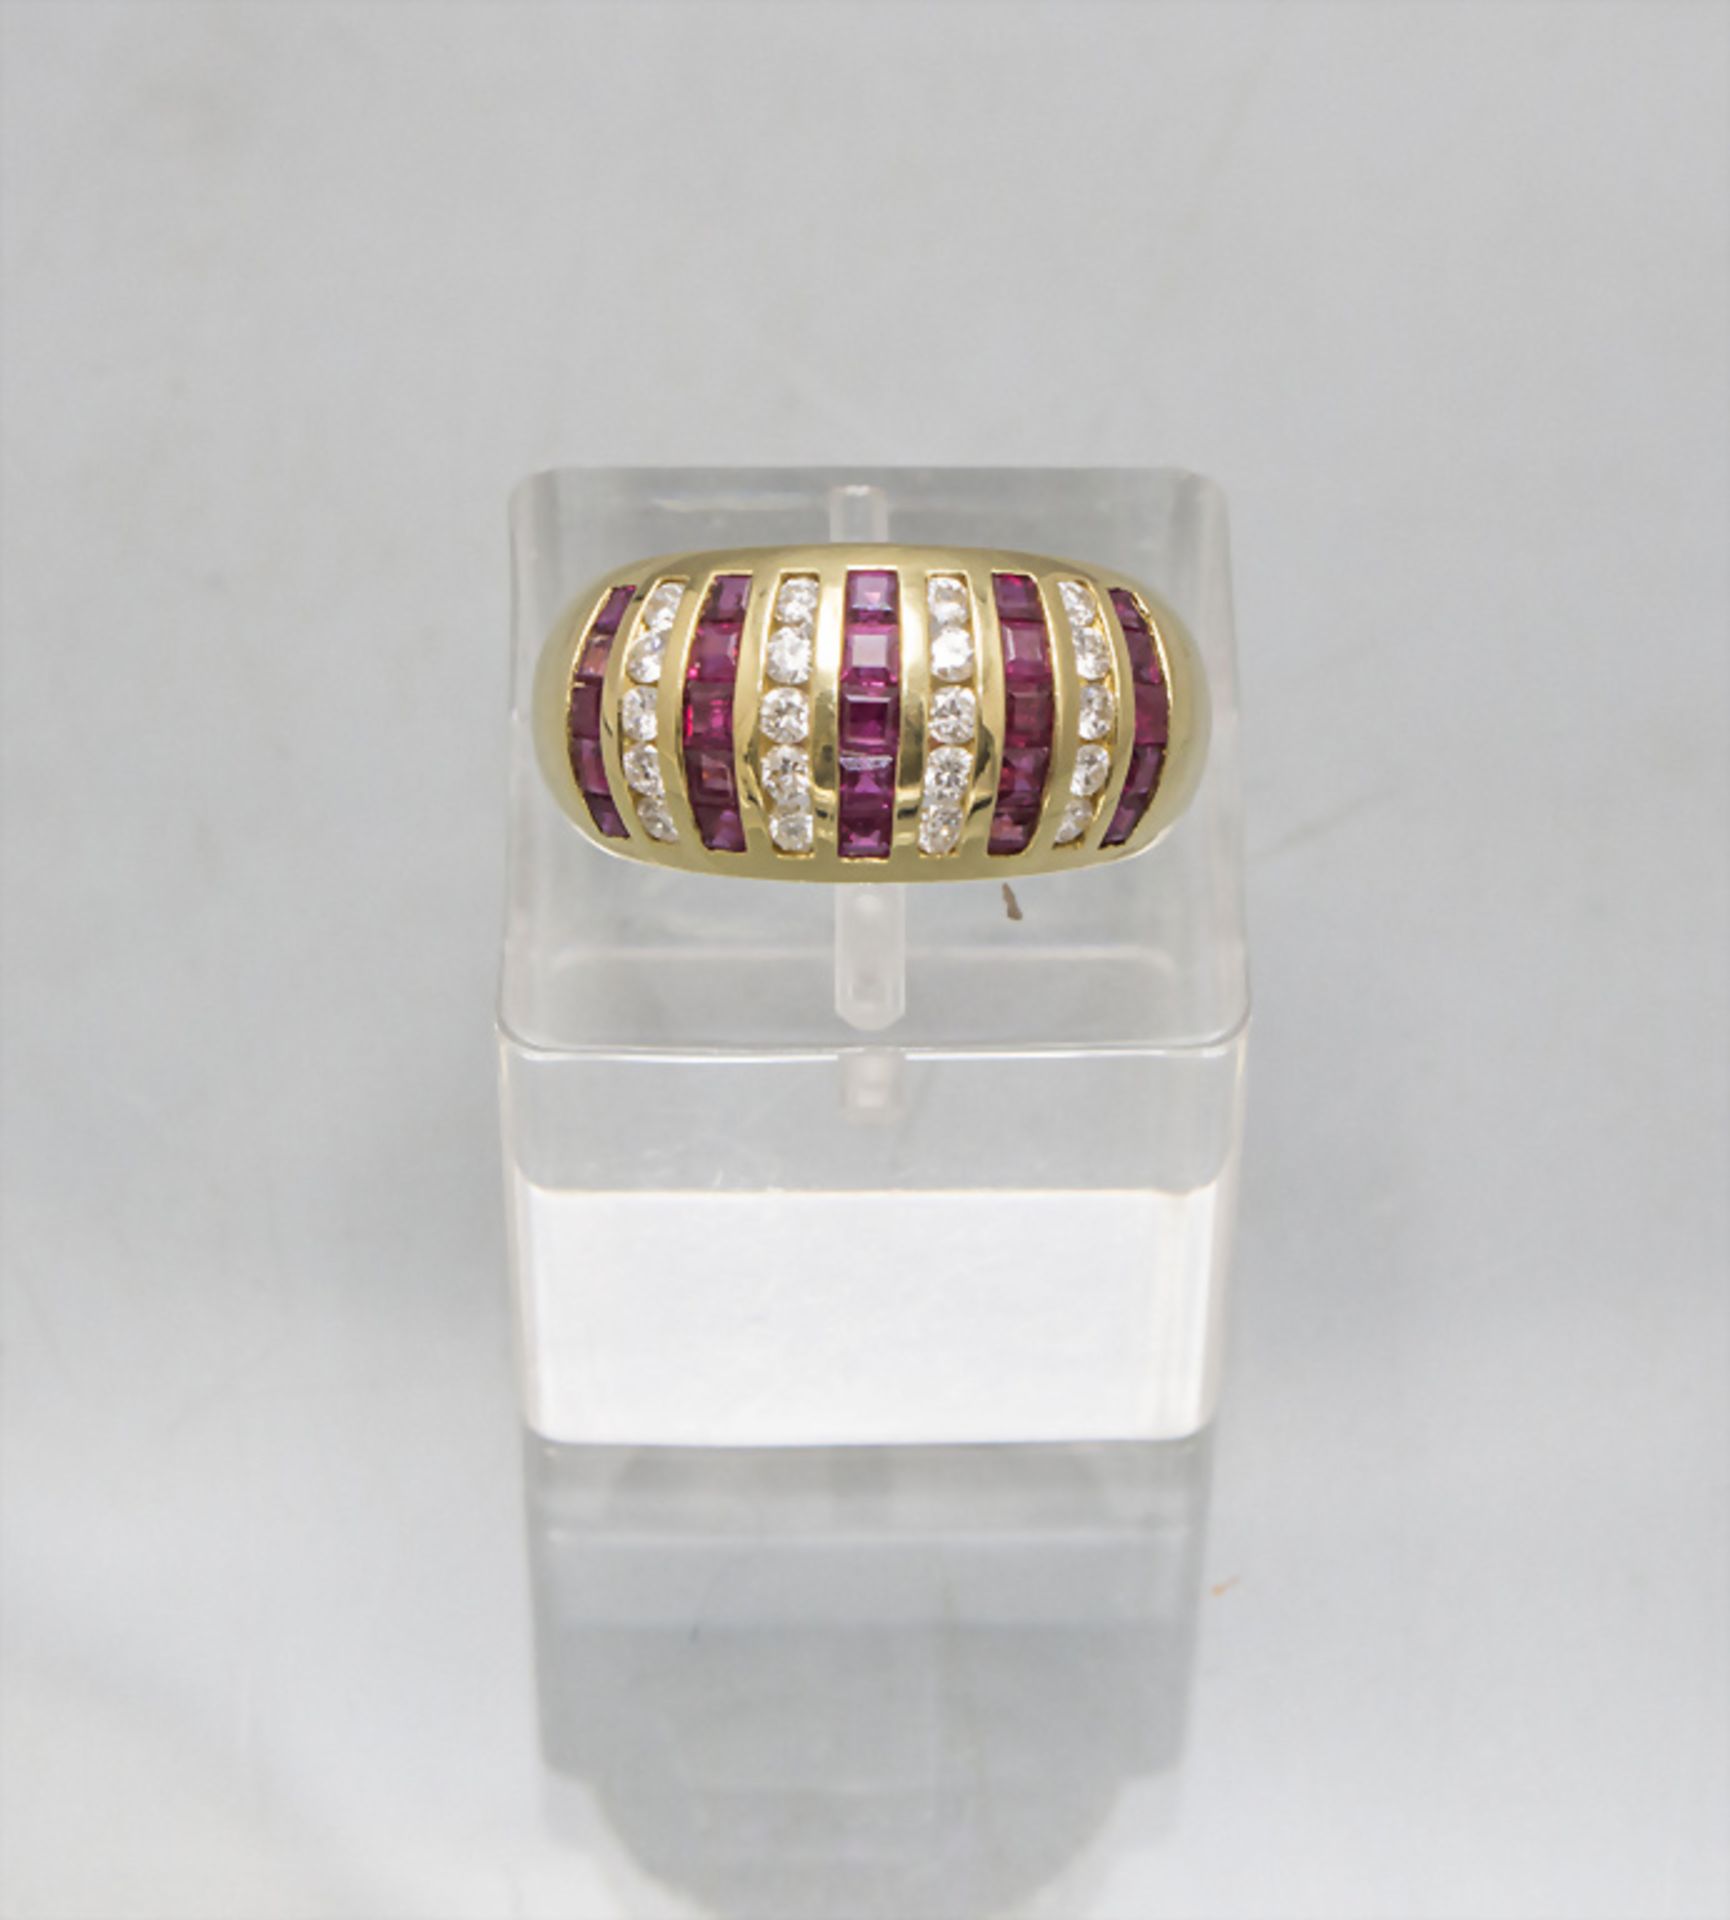 Damenring mit Diamanten und Rubinen / An 18 ct ladies gold ring with diamonds and rubies